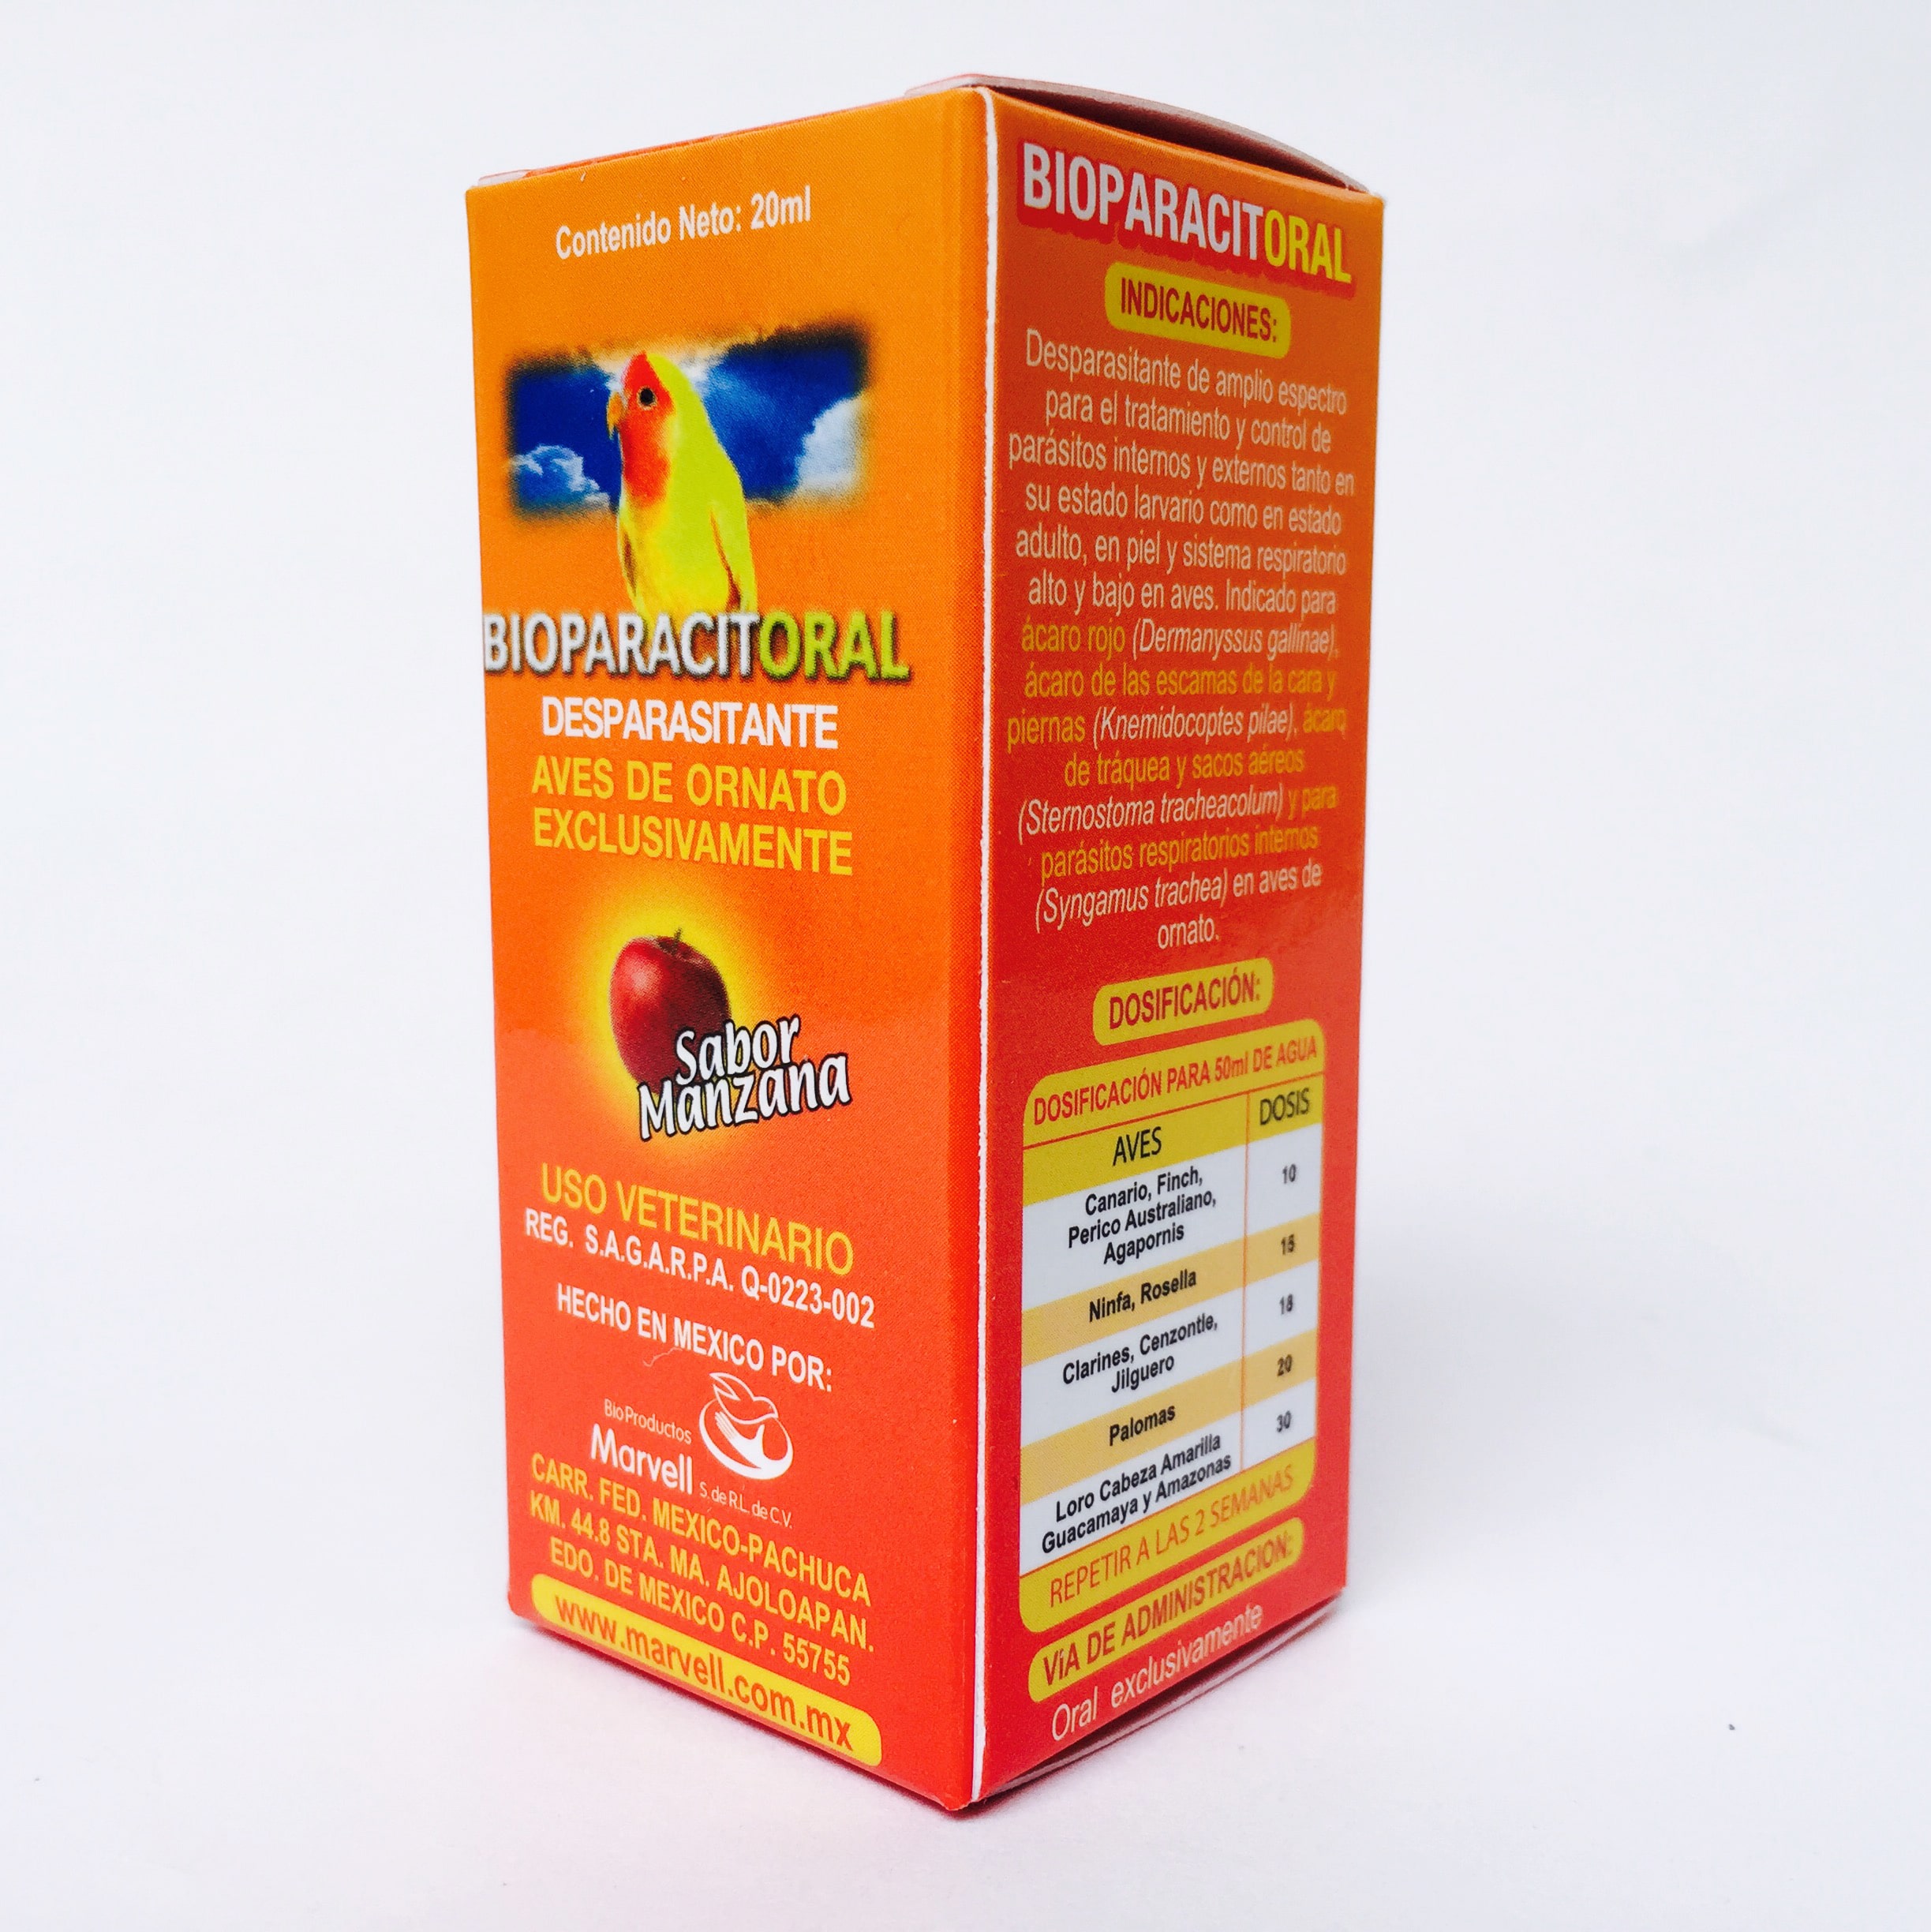 Marvell Bioparacit Oral (Desparasitante) 20 ml